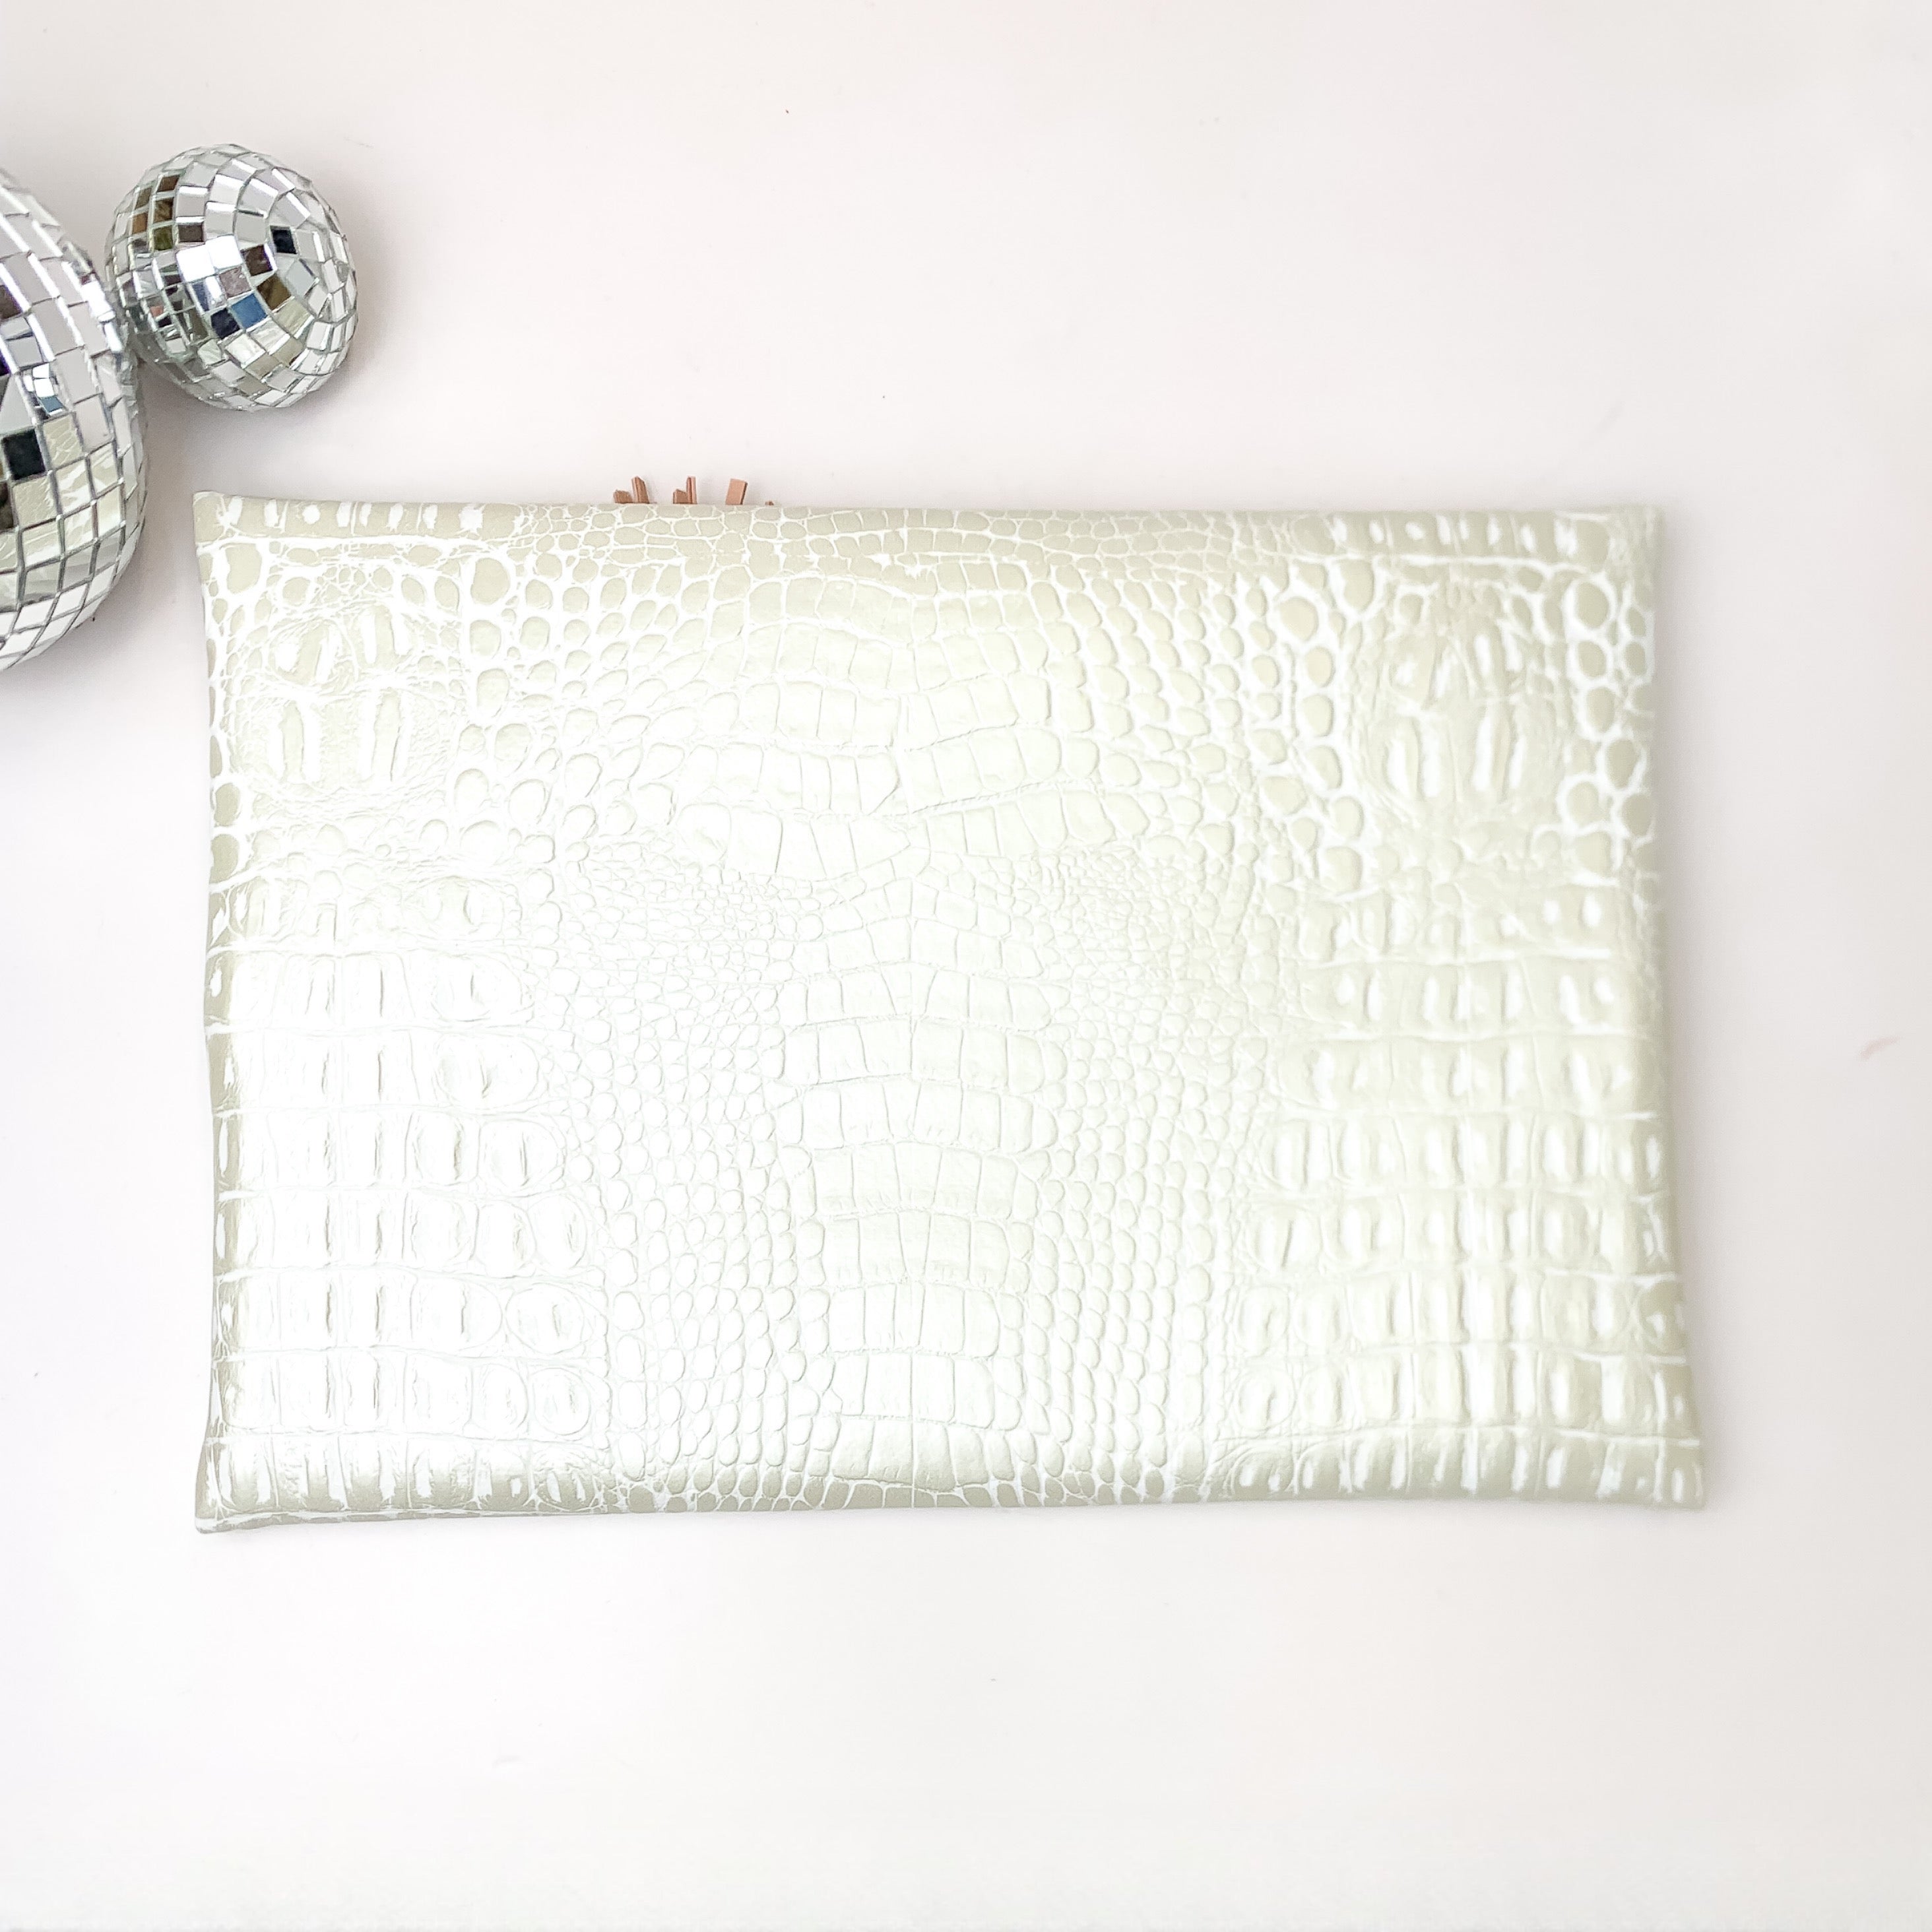 Makeup Junkie | Medium Shade of Pearl Lay Flat Bag in Pearl White Croc Print